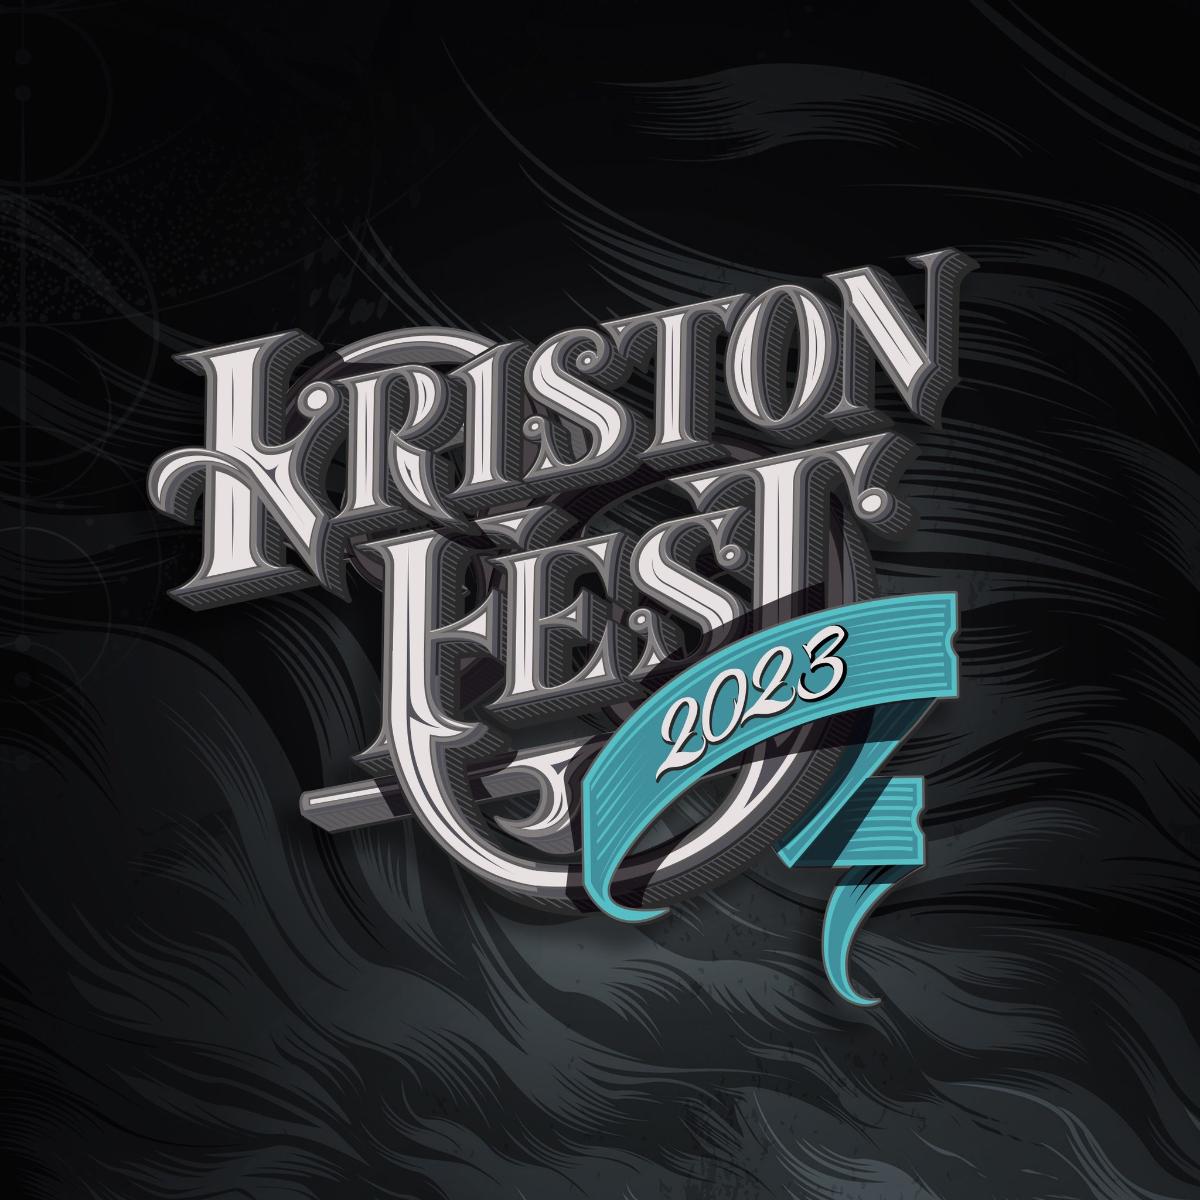 Kristonfest